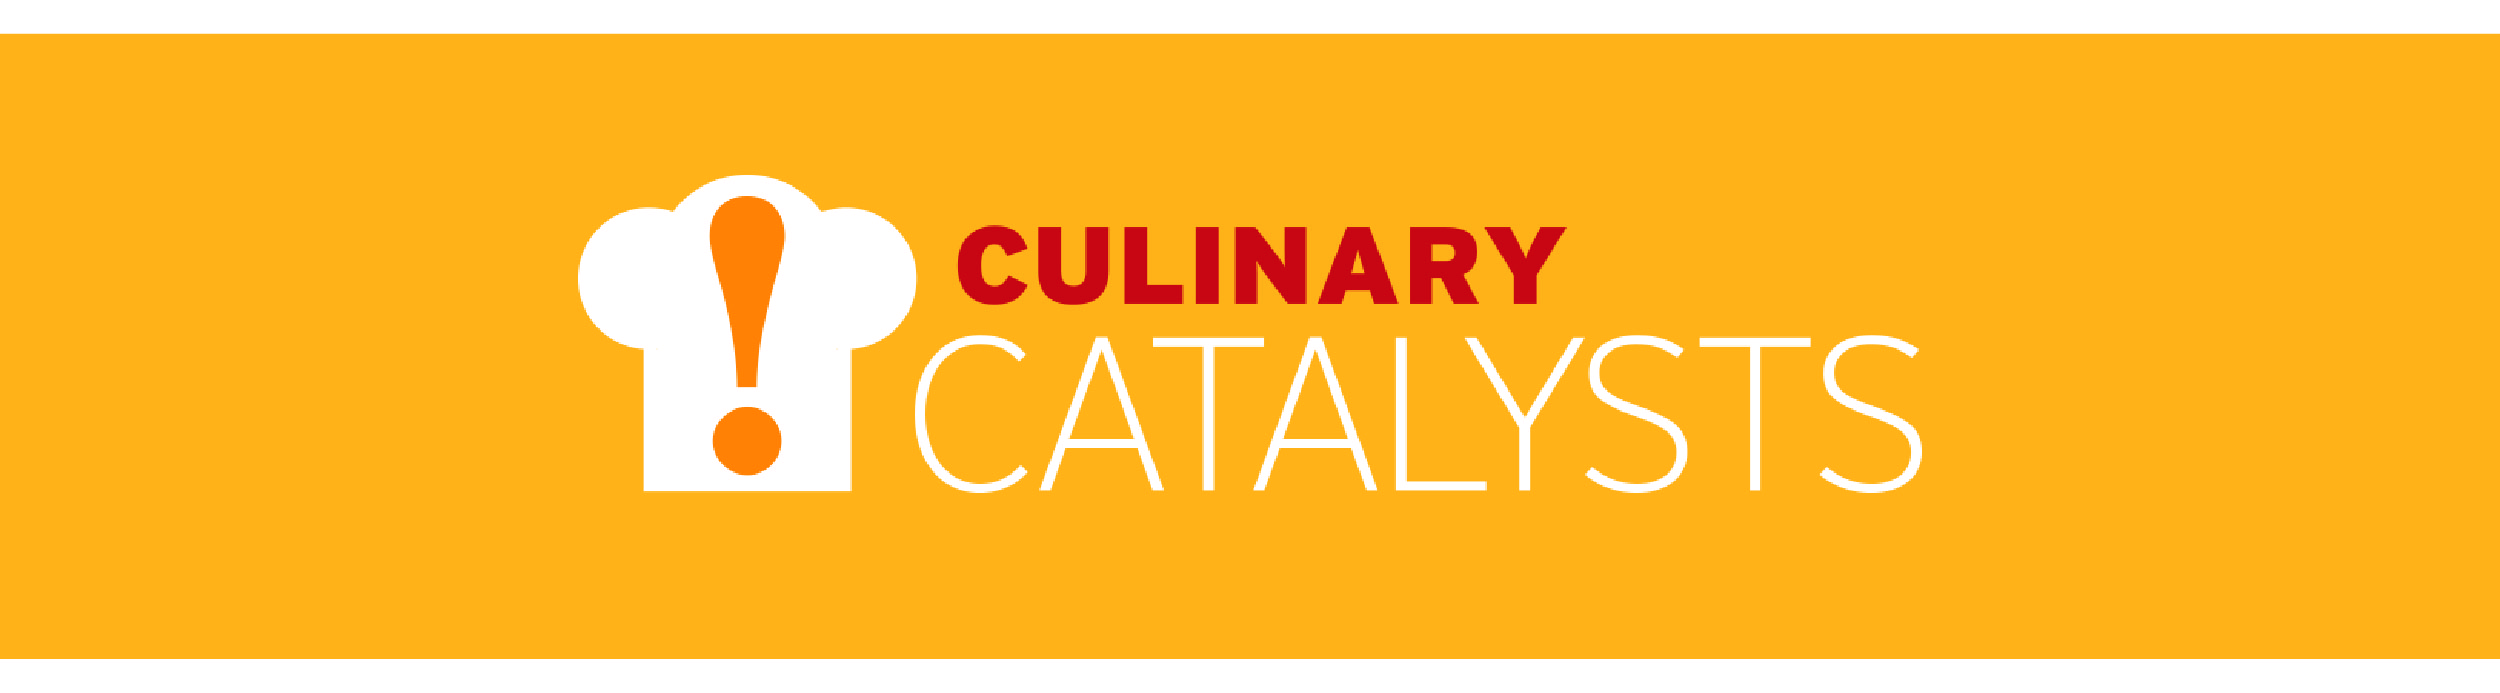 Culinary Catalysts Website Banner 1200x300.jpg